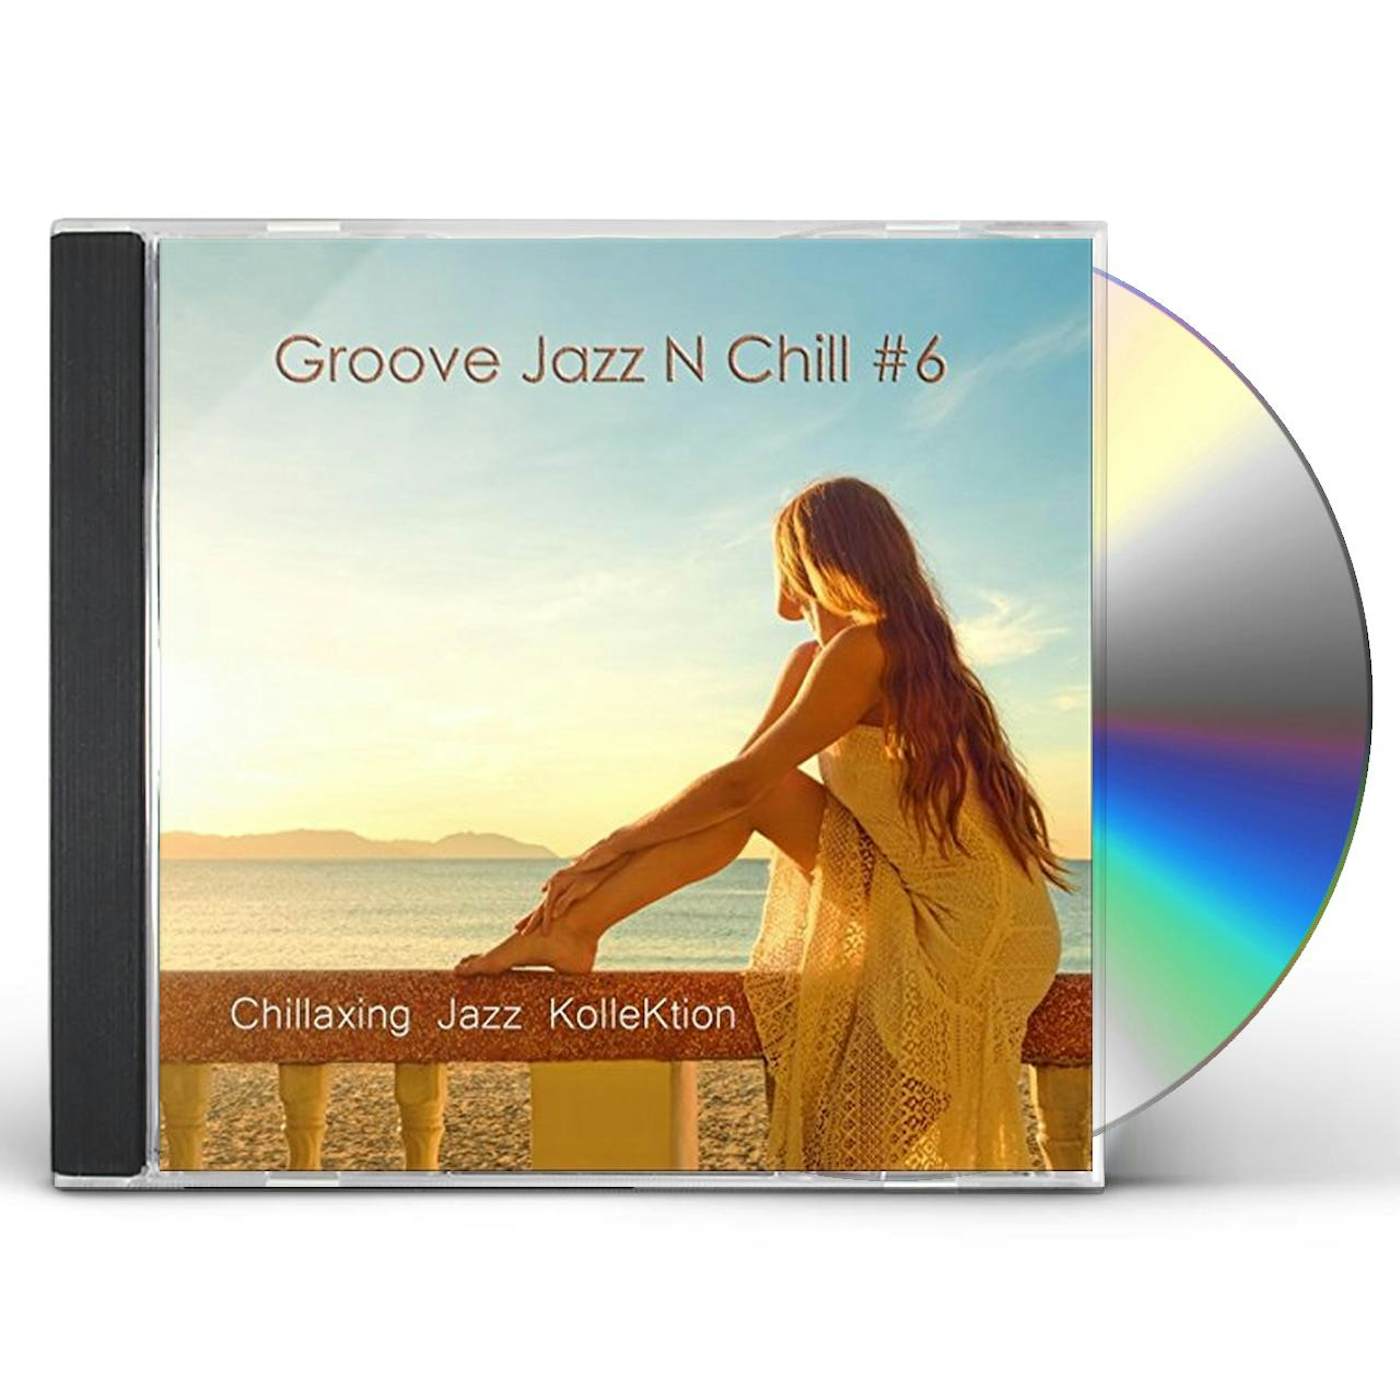 Chillaxing Jazz Kollektion GROOVE JAZZ N CHILL 6 CD